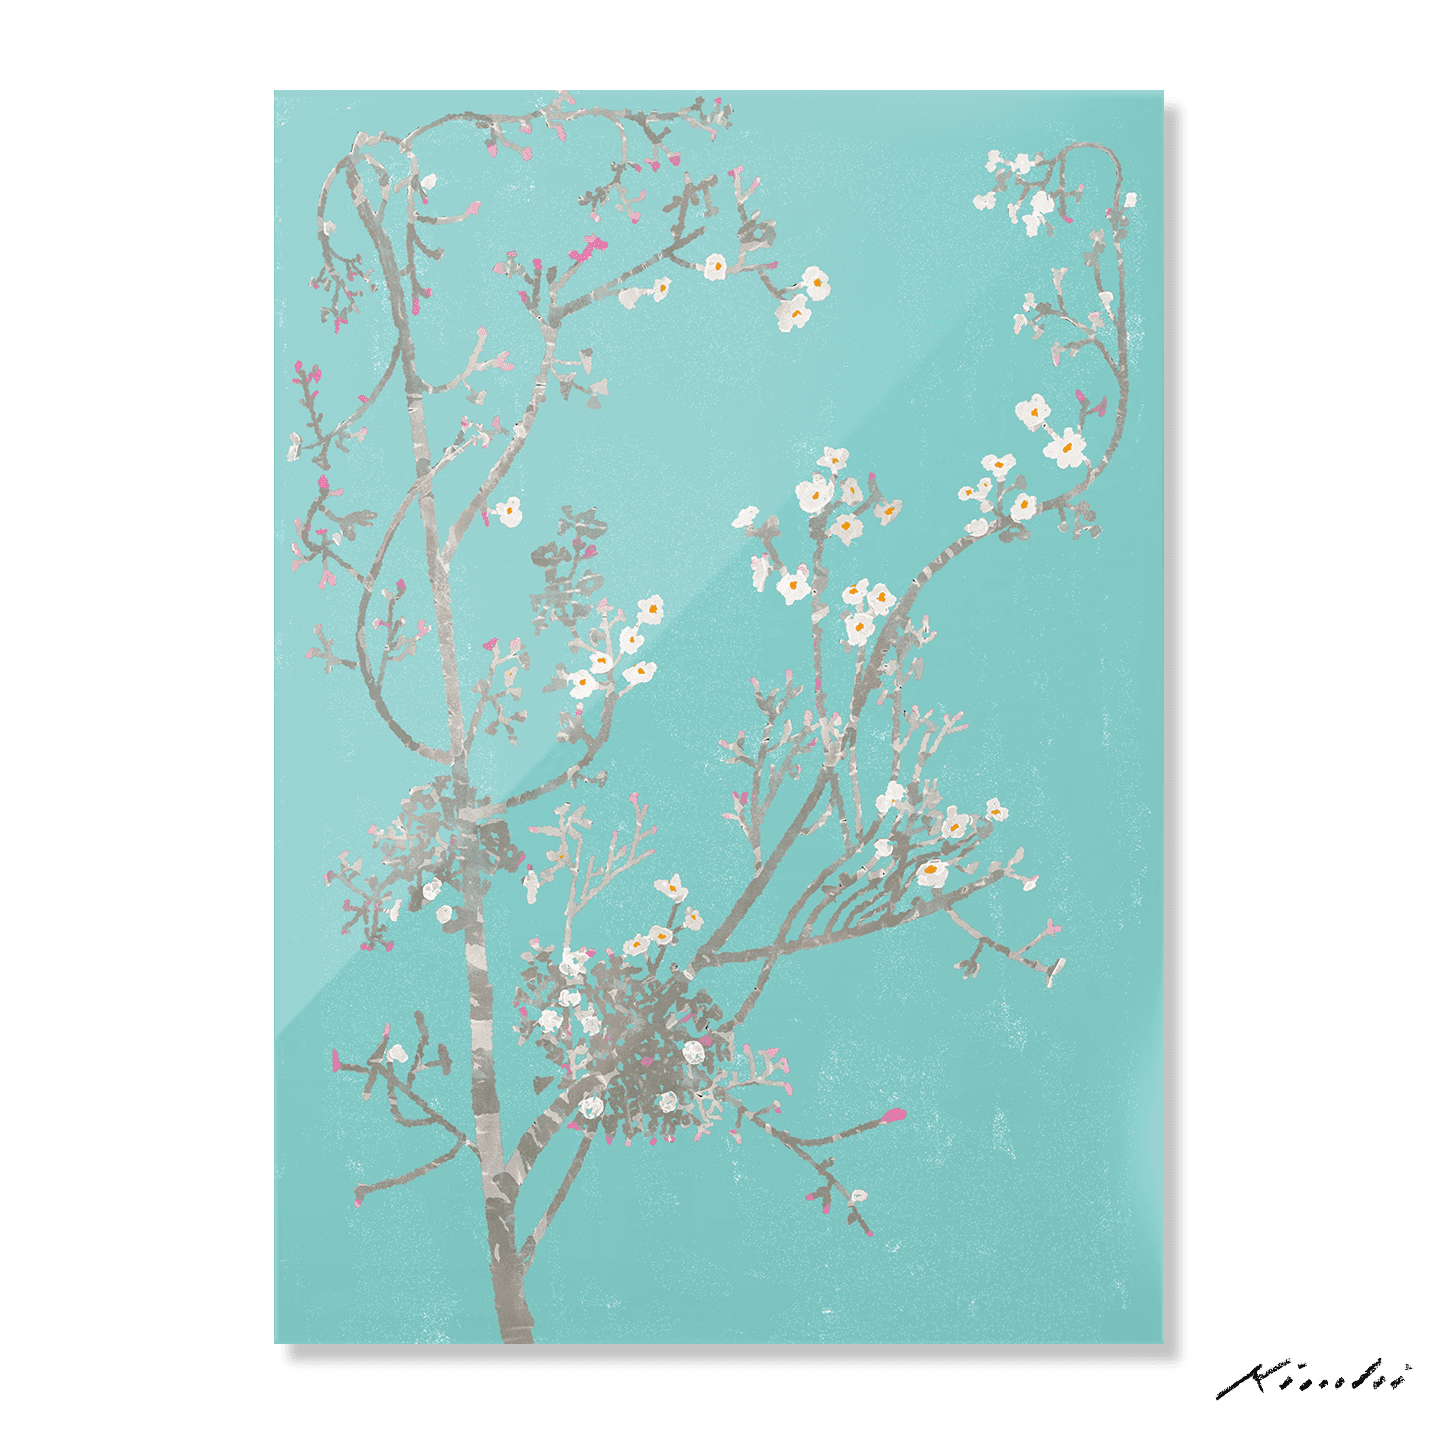 Blossoms